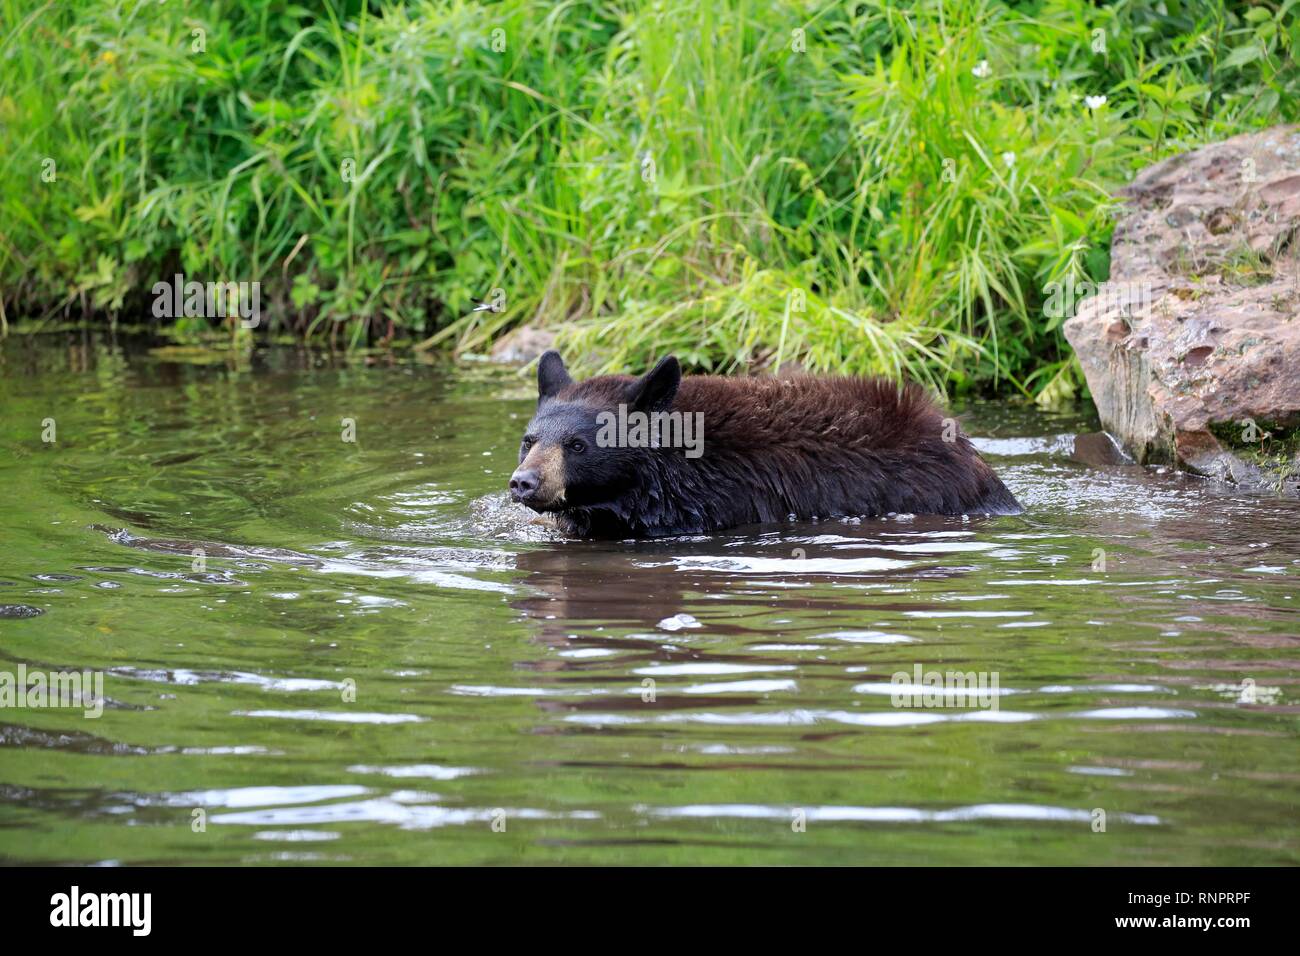 American Black Bear (Ursus americanus), young animal in water, Pine County, Minnesota, USA Stock Photo